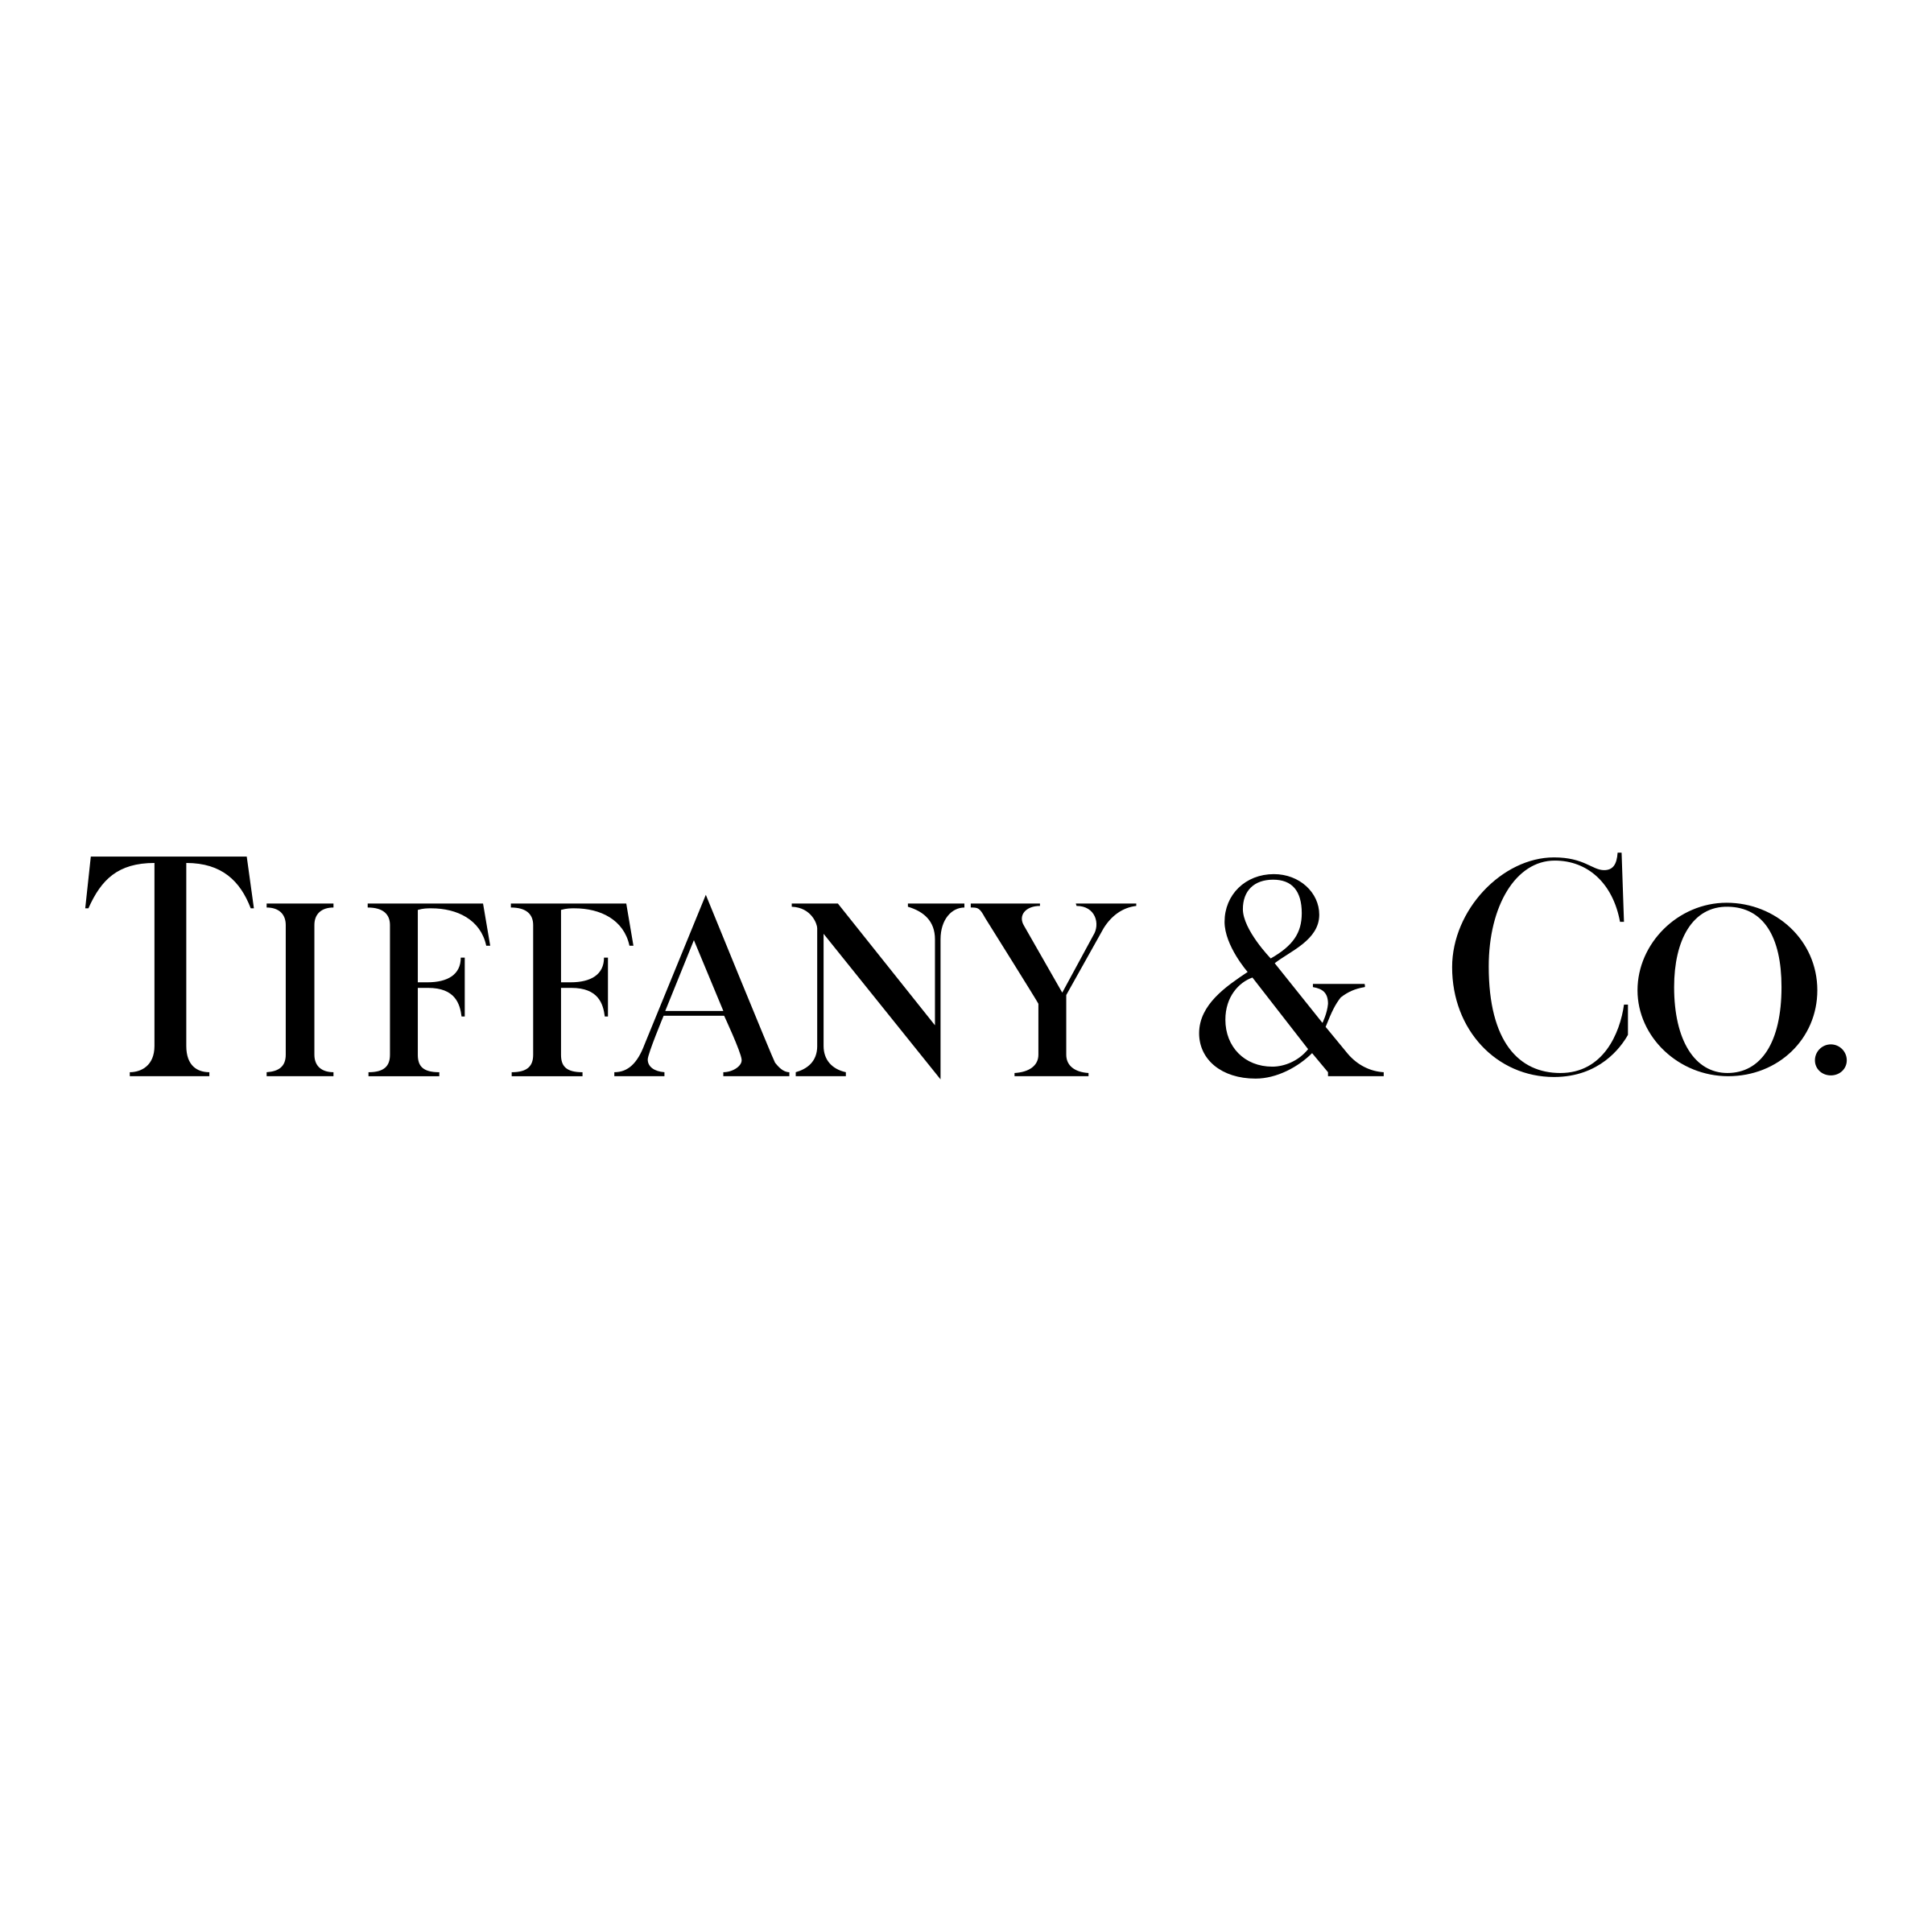 tiffany-co-logo-black-and-white